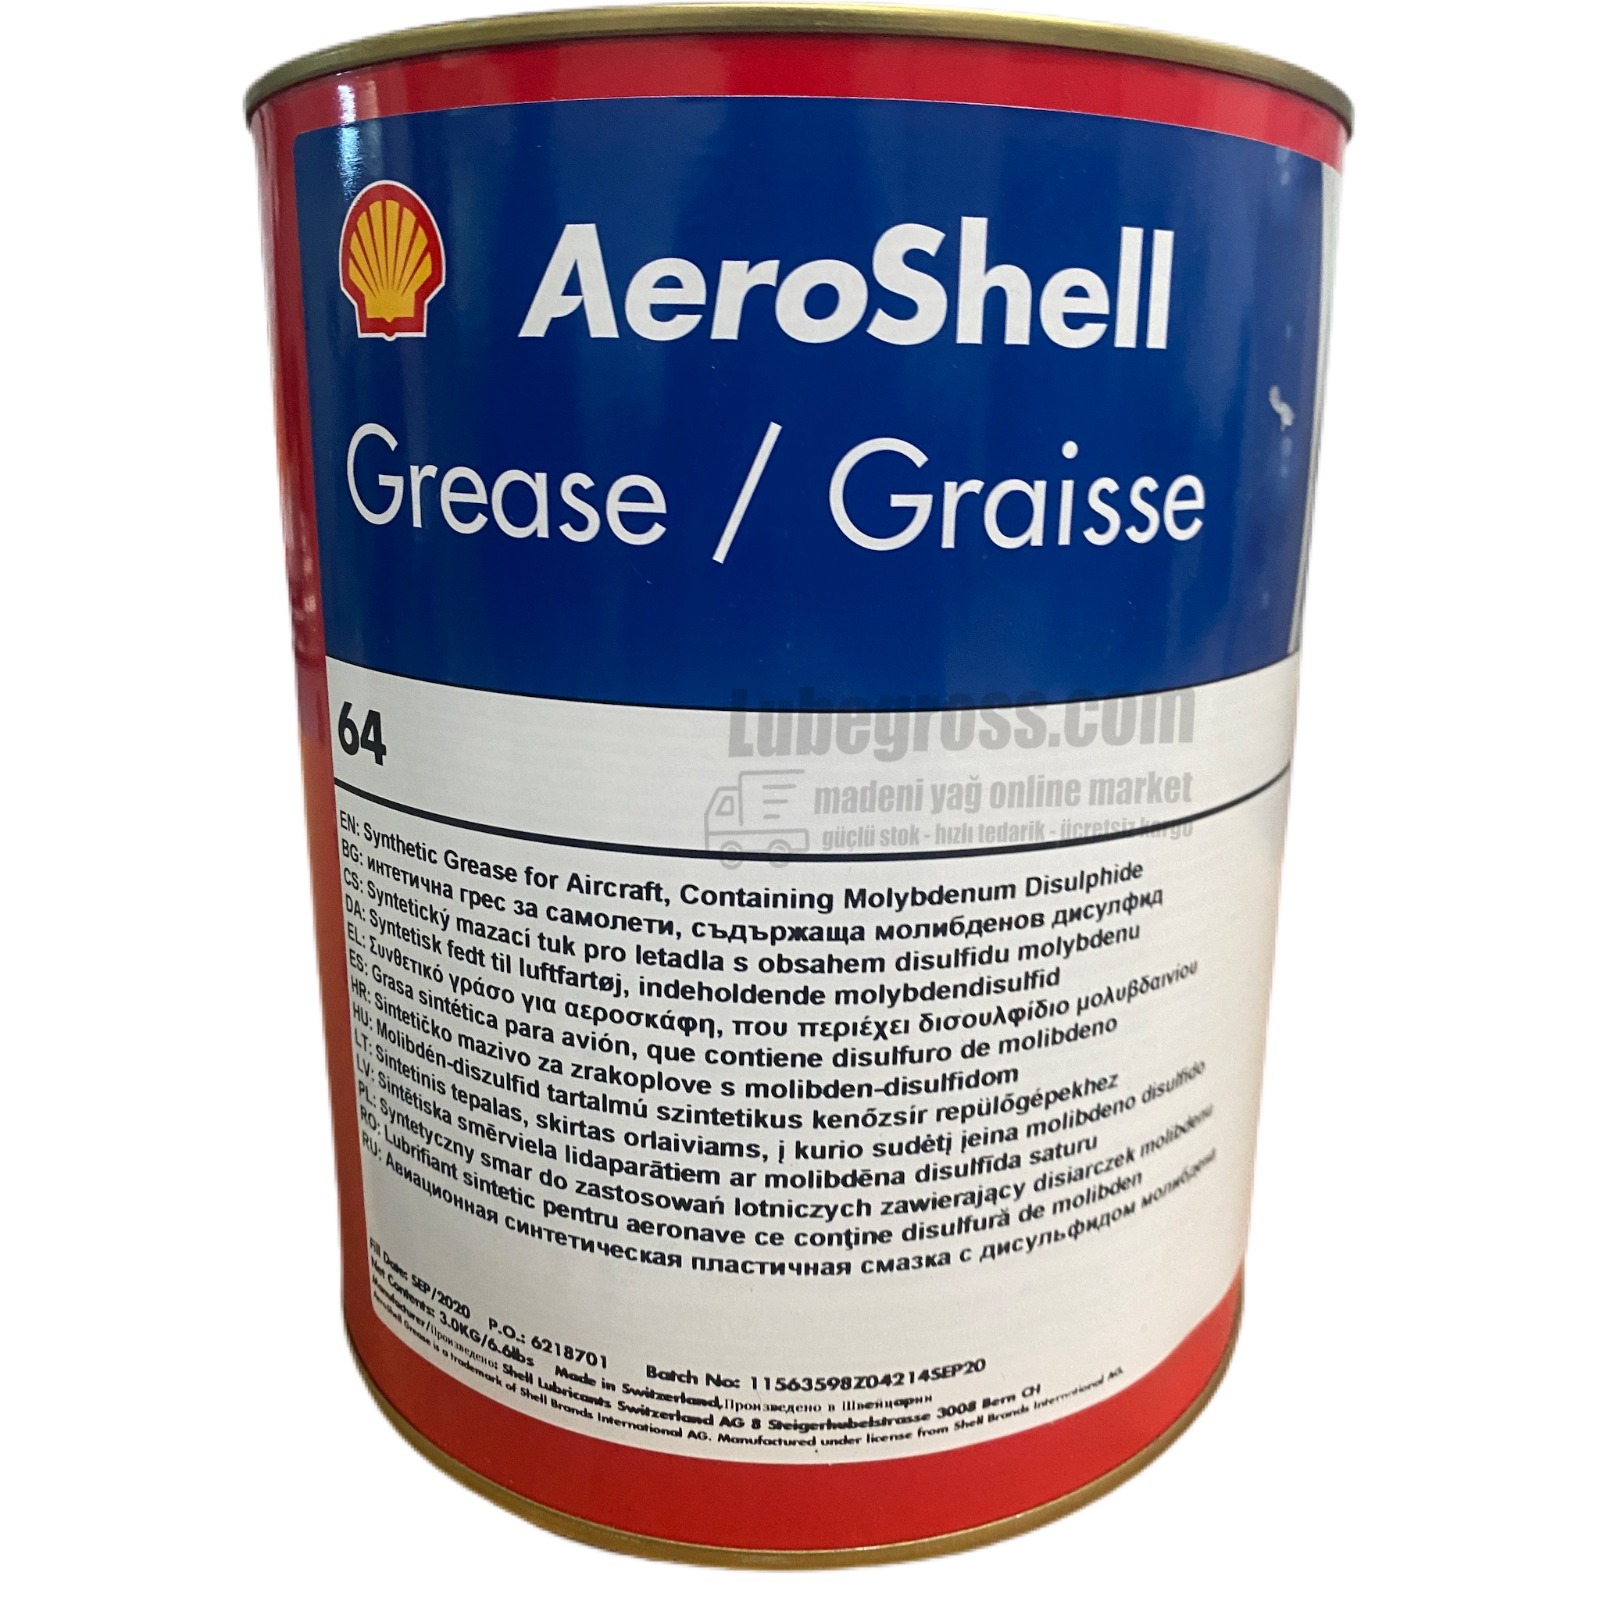 Aeroshell Grease 64 